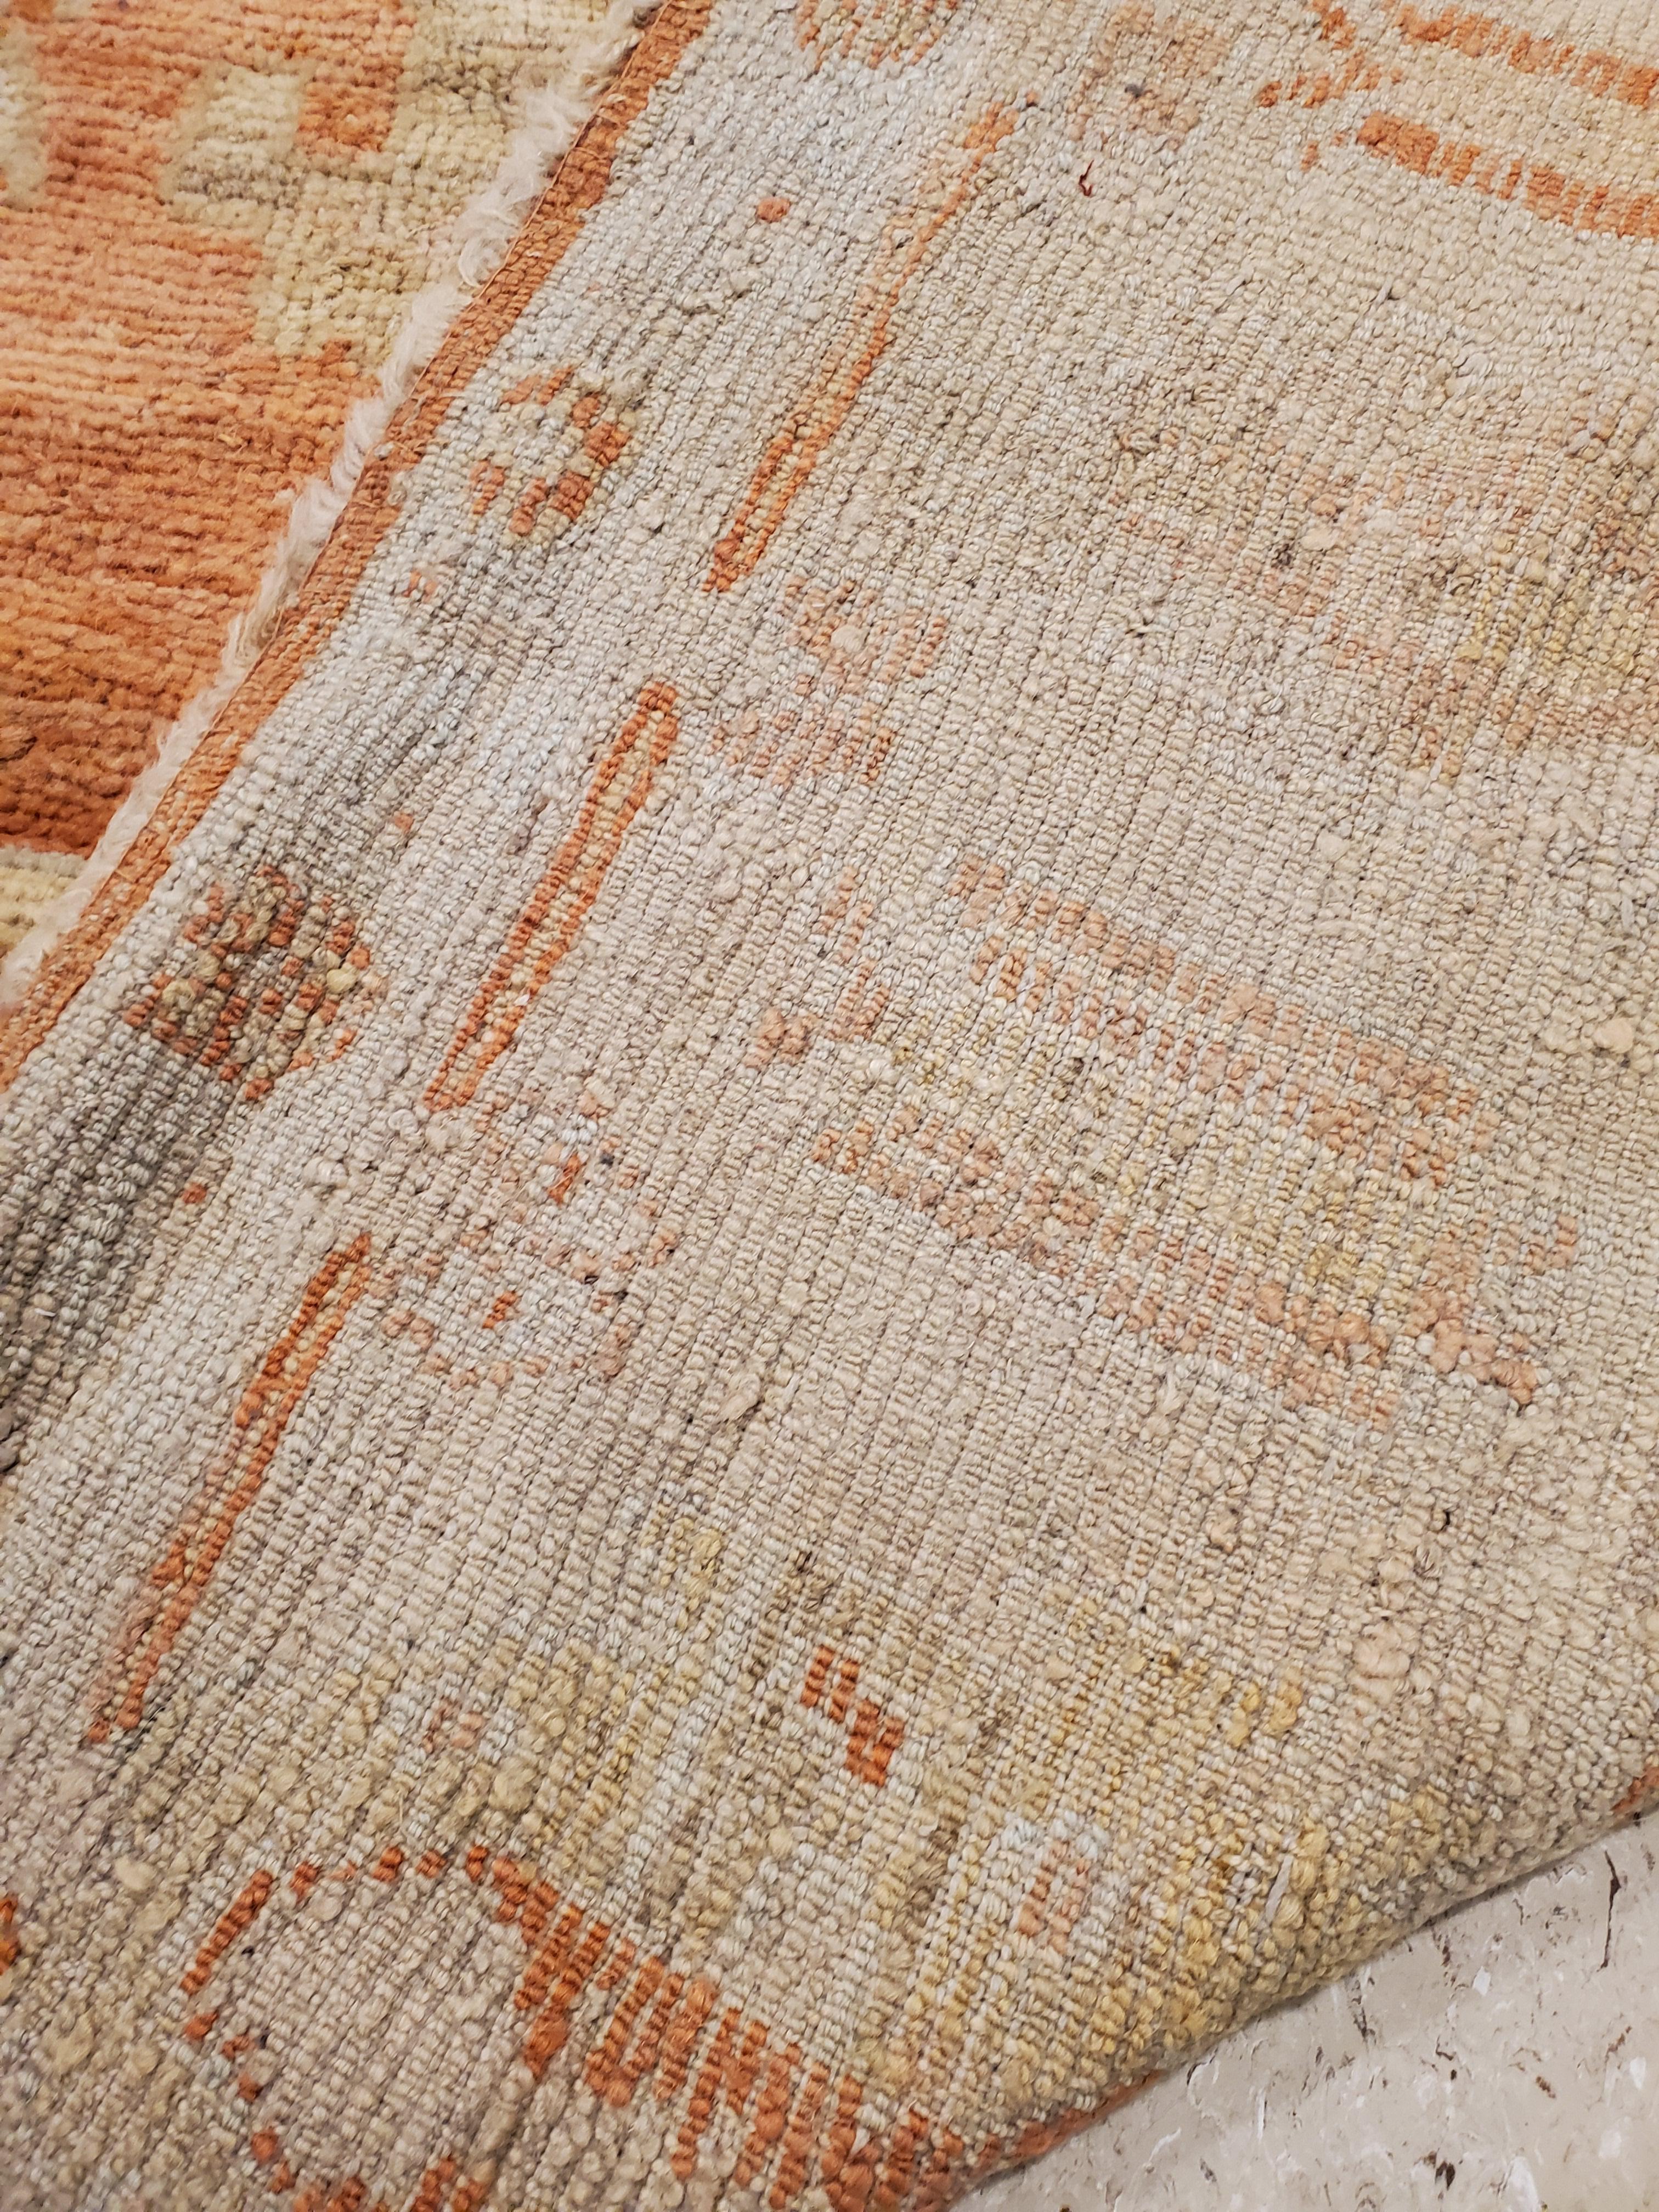 Antique Oushak Carpet, Handmade Oriental Rug, Coral Field, Gold, Ivory Border For Sale 4